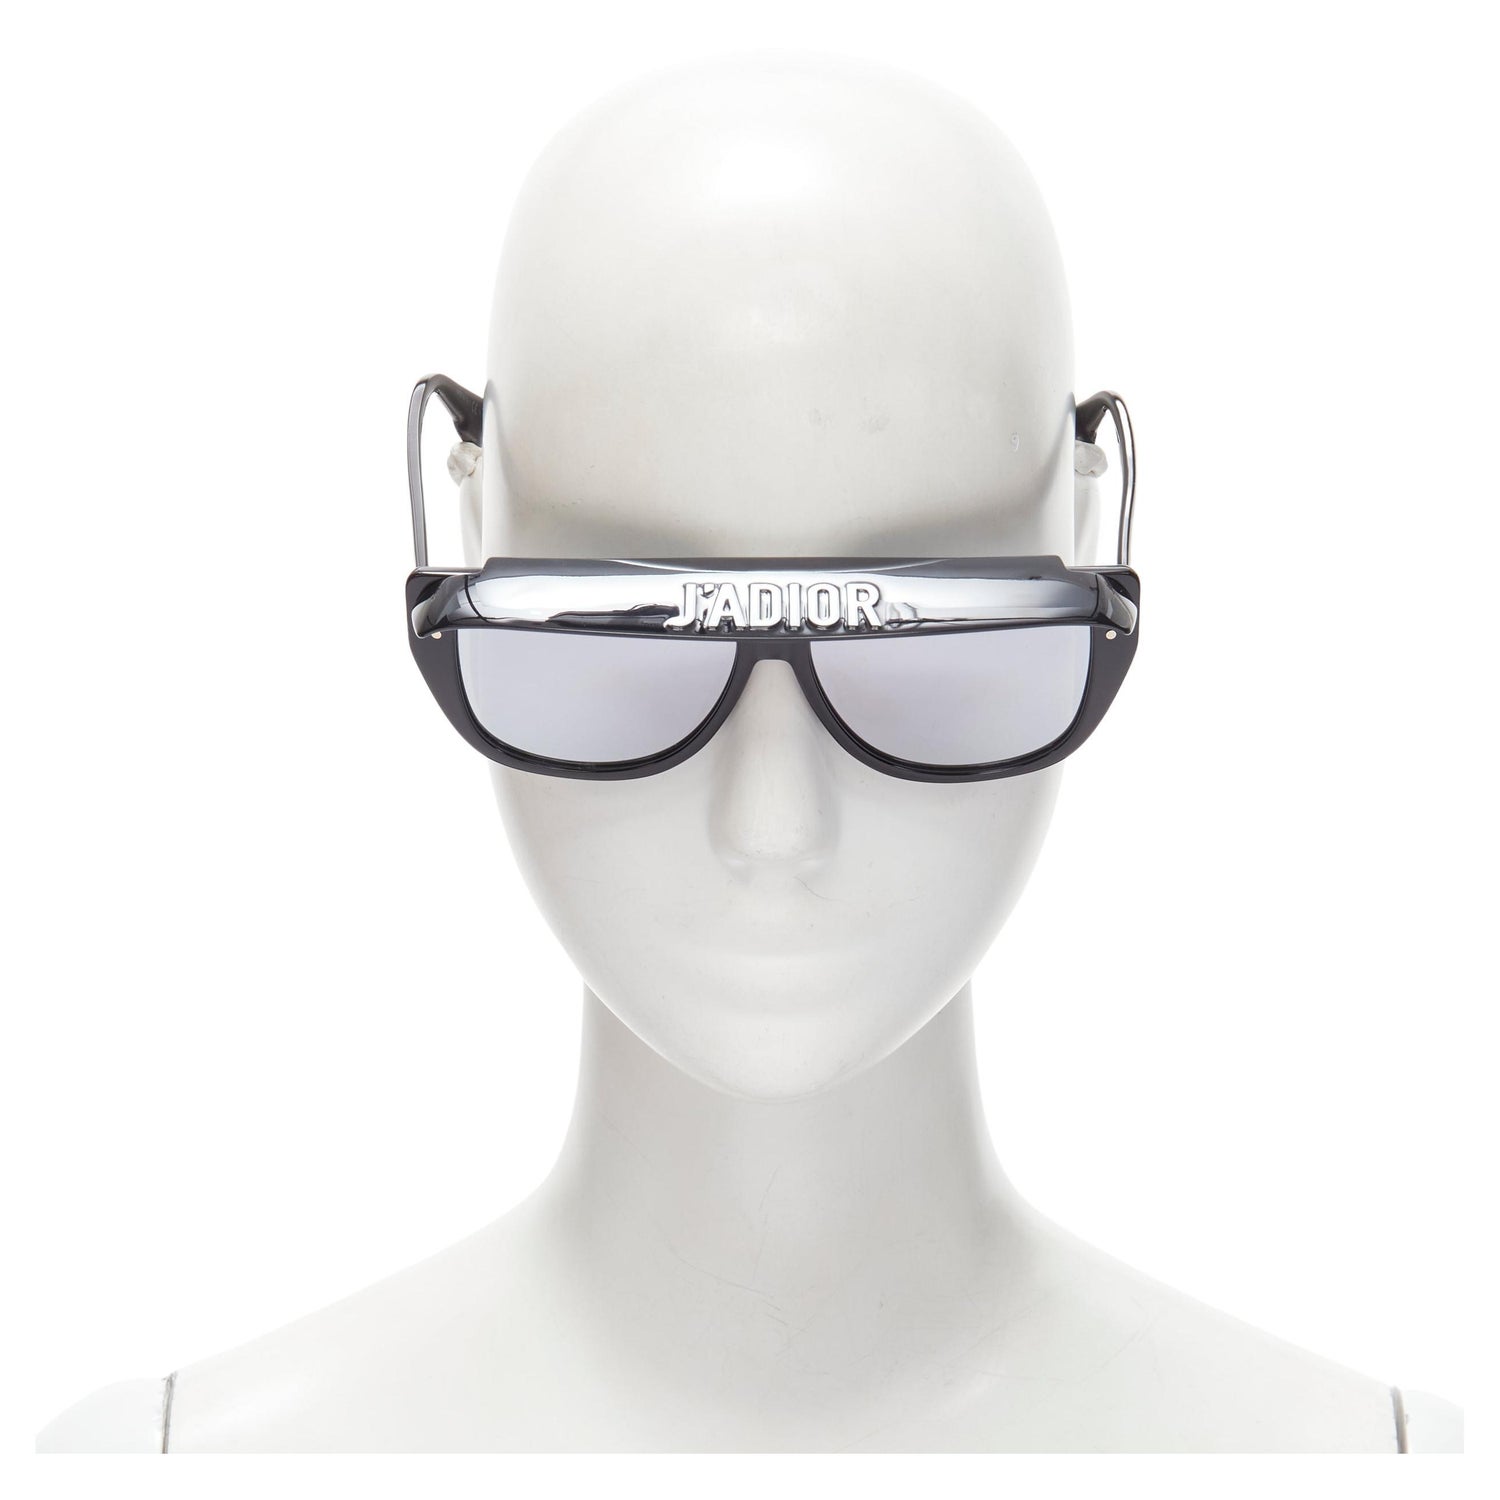 J Sunglasses - 3 For Sale on